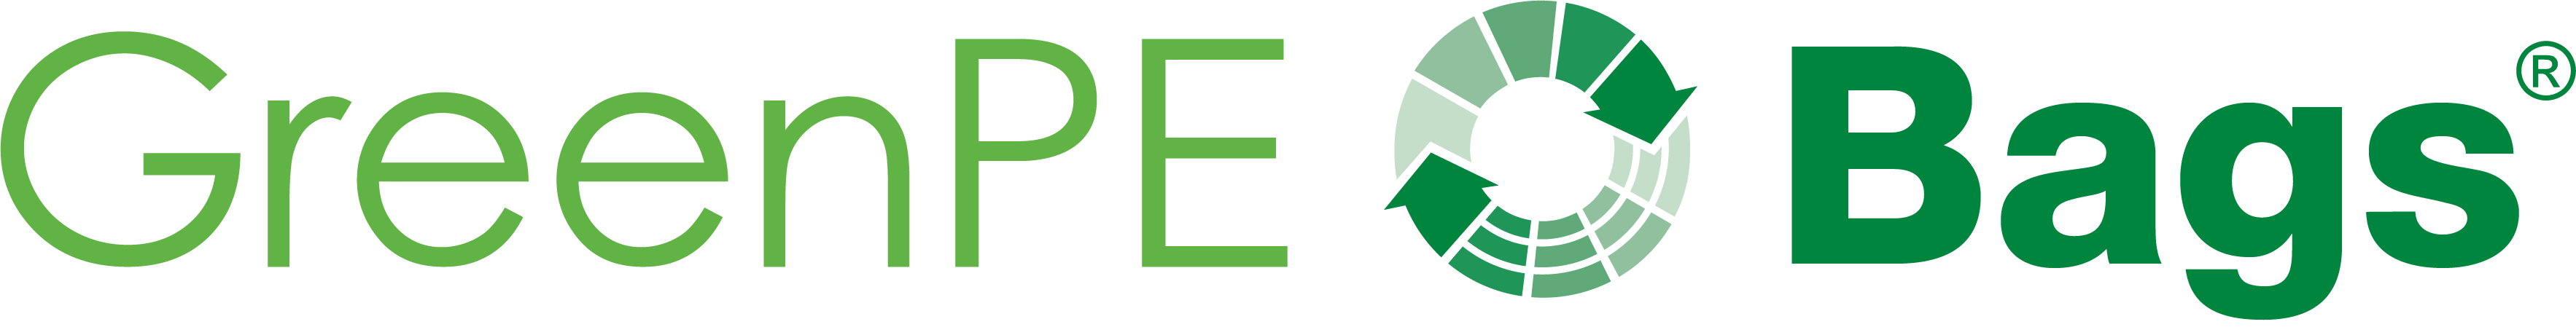 GreenPE Bags logo